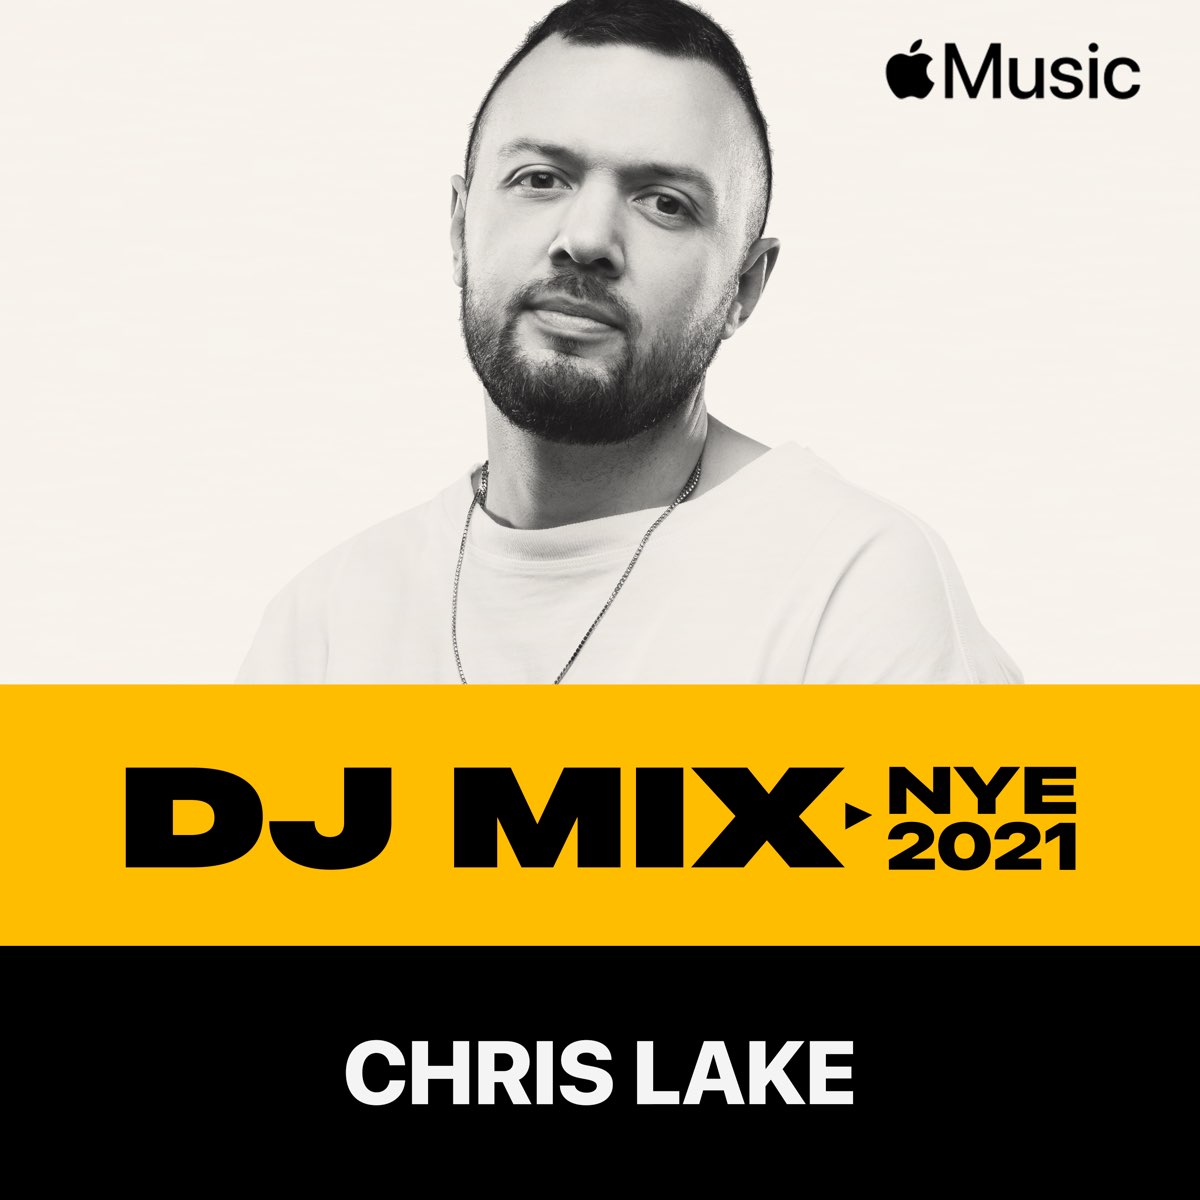 NYE 2021 (DJ Mix) - Album by Chris Lake - Apple Music